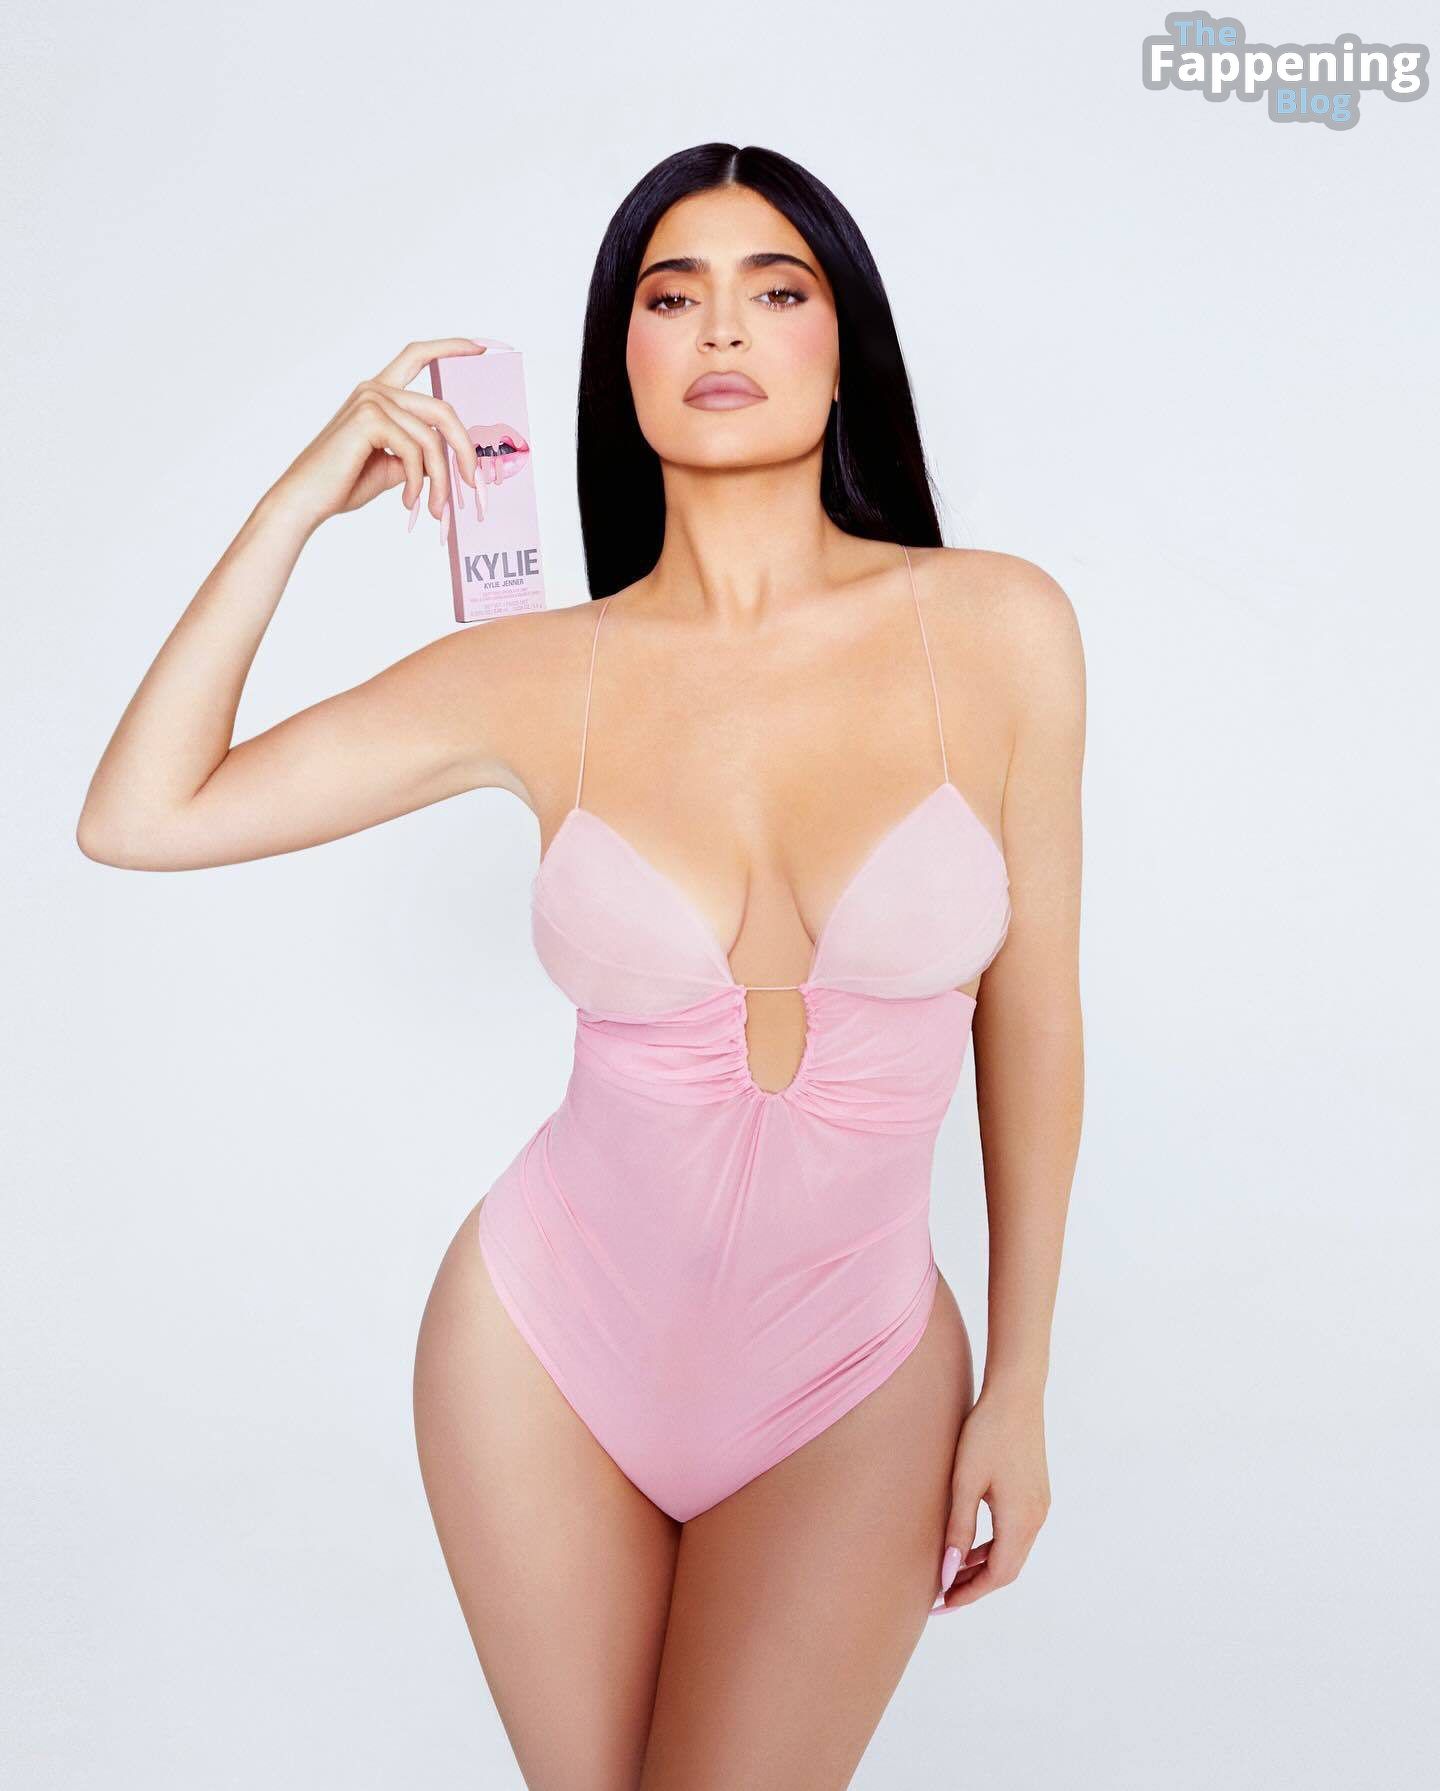 Kylie-Jenner-Curves-Kylie-Cosmetic-1-1-thefappeningblog.com_.jpg